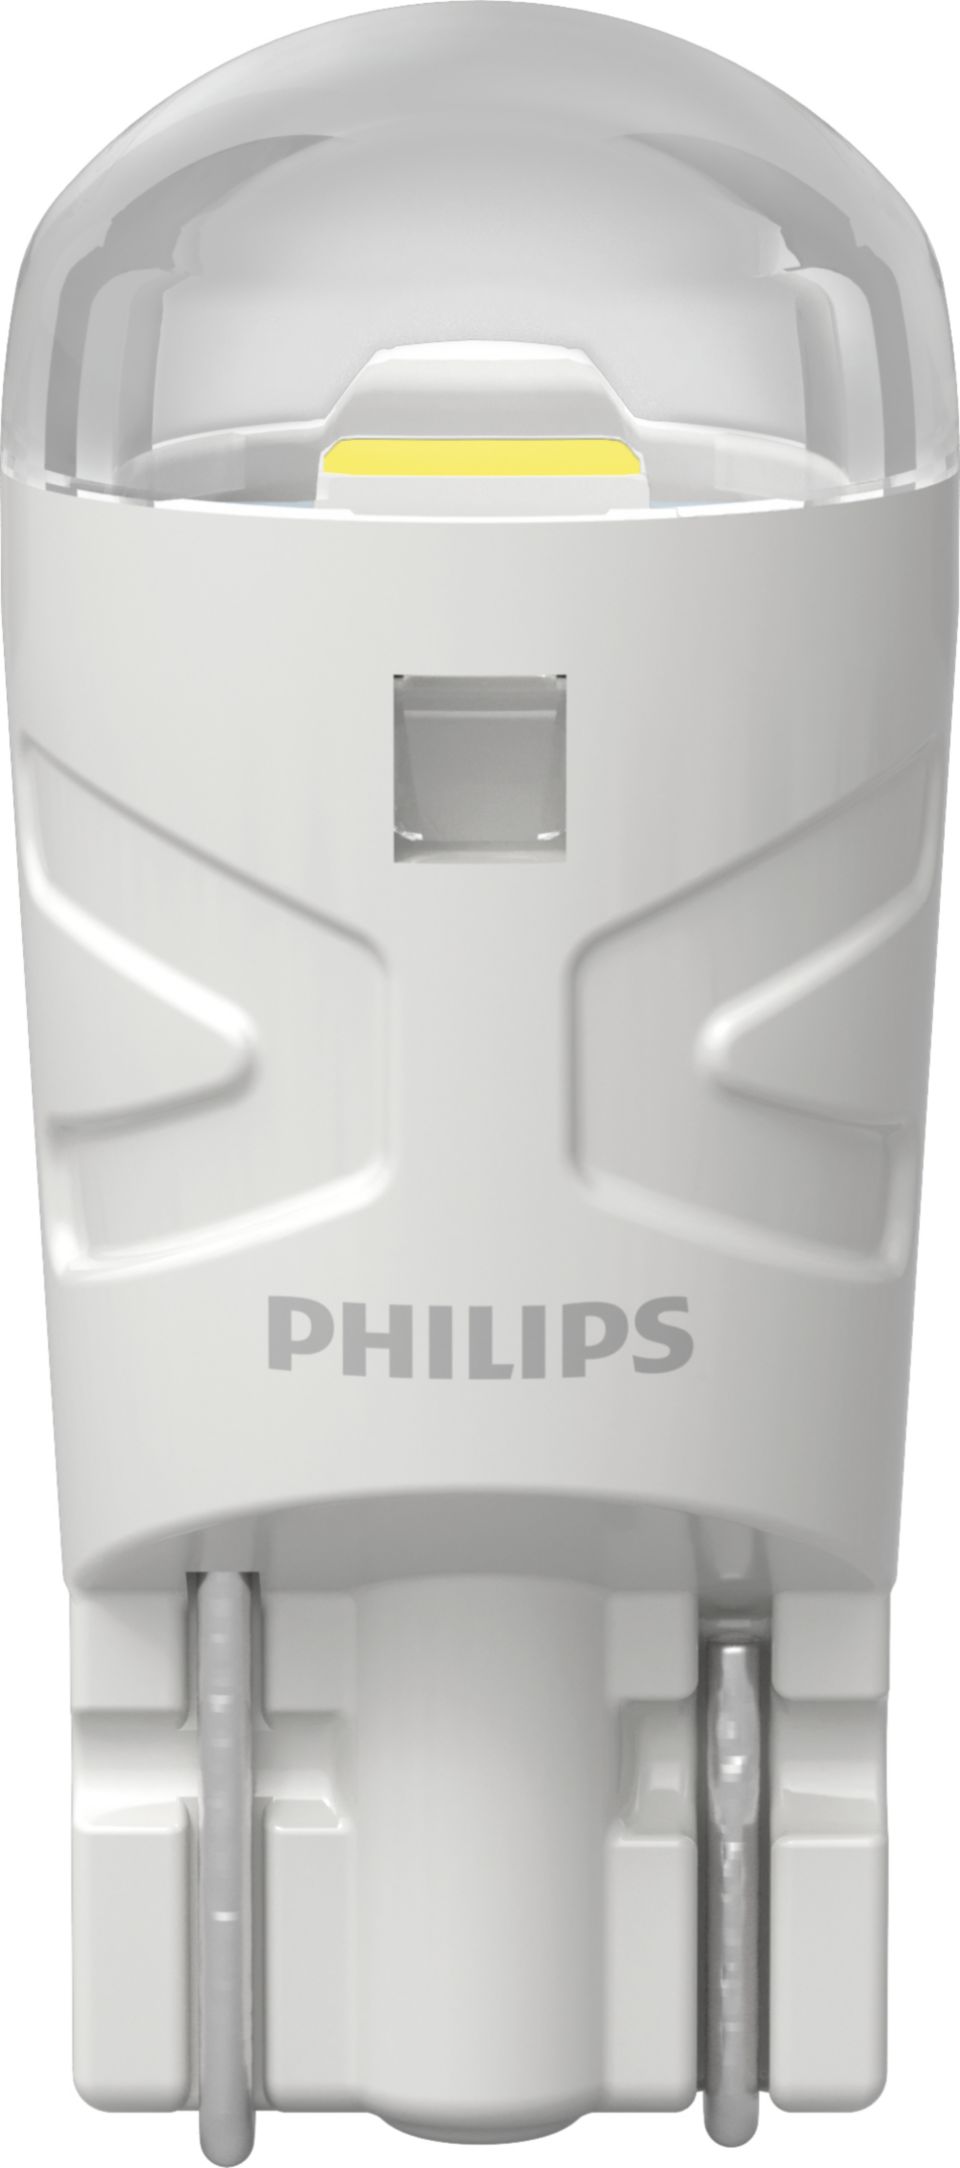 Daylights Austria - Philips PY21W BAU15s LED Ultinon Pro3100 SI